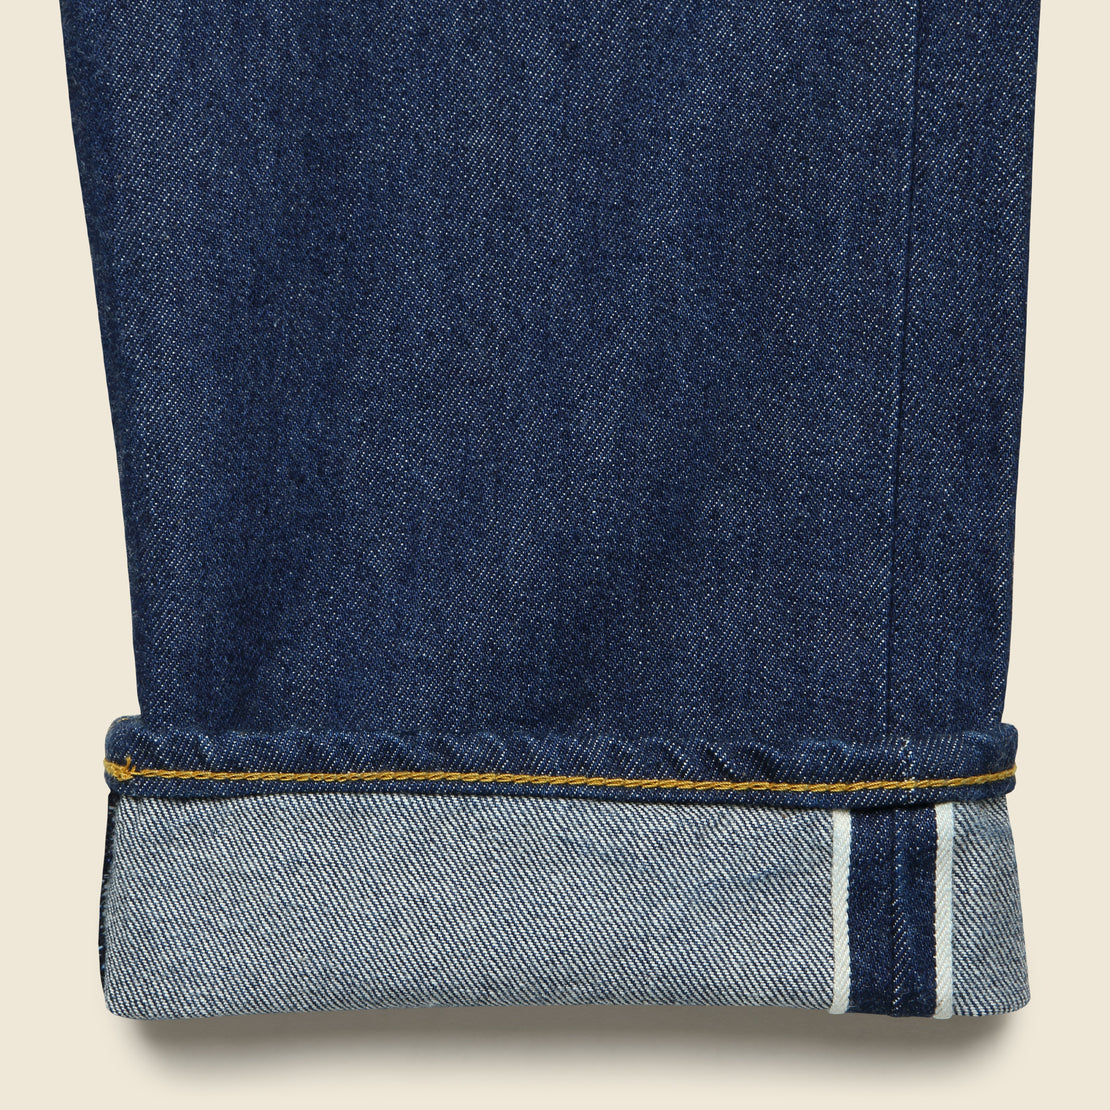 1980s 501 Jean - Dark Rigid - Levi's Made in Japan - STAG Provisions - Pants - Denim